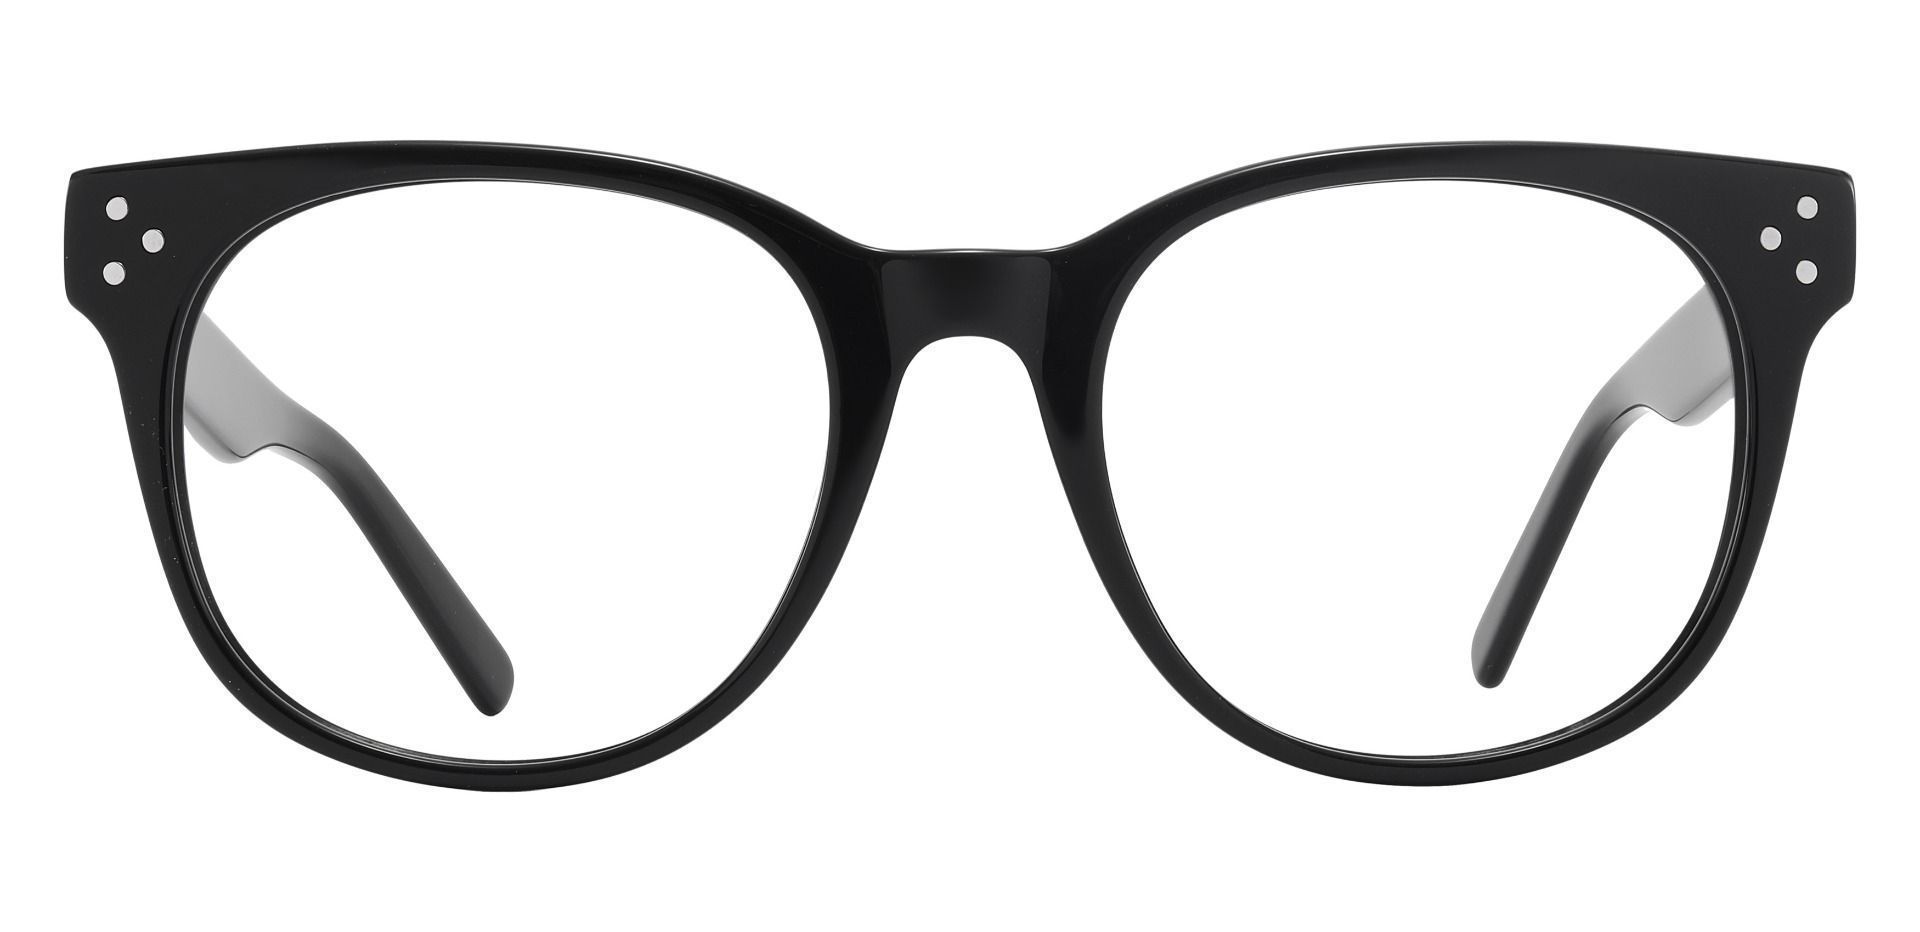 Orwell Oval Eyeglasses Frame - Black